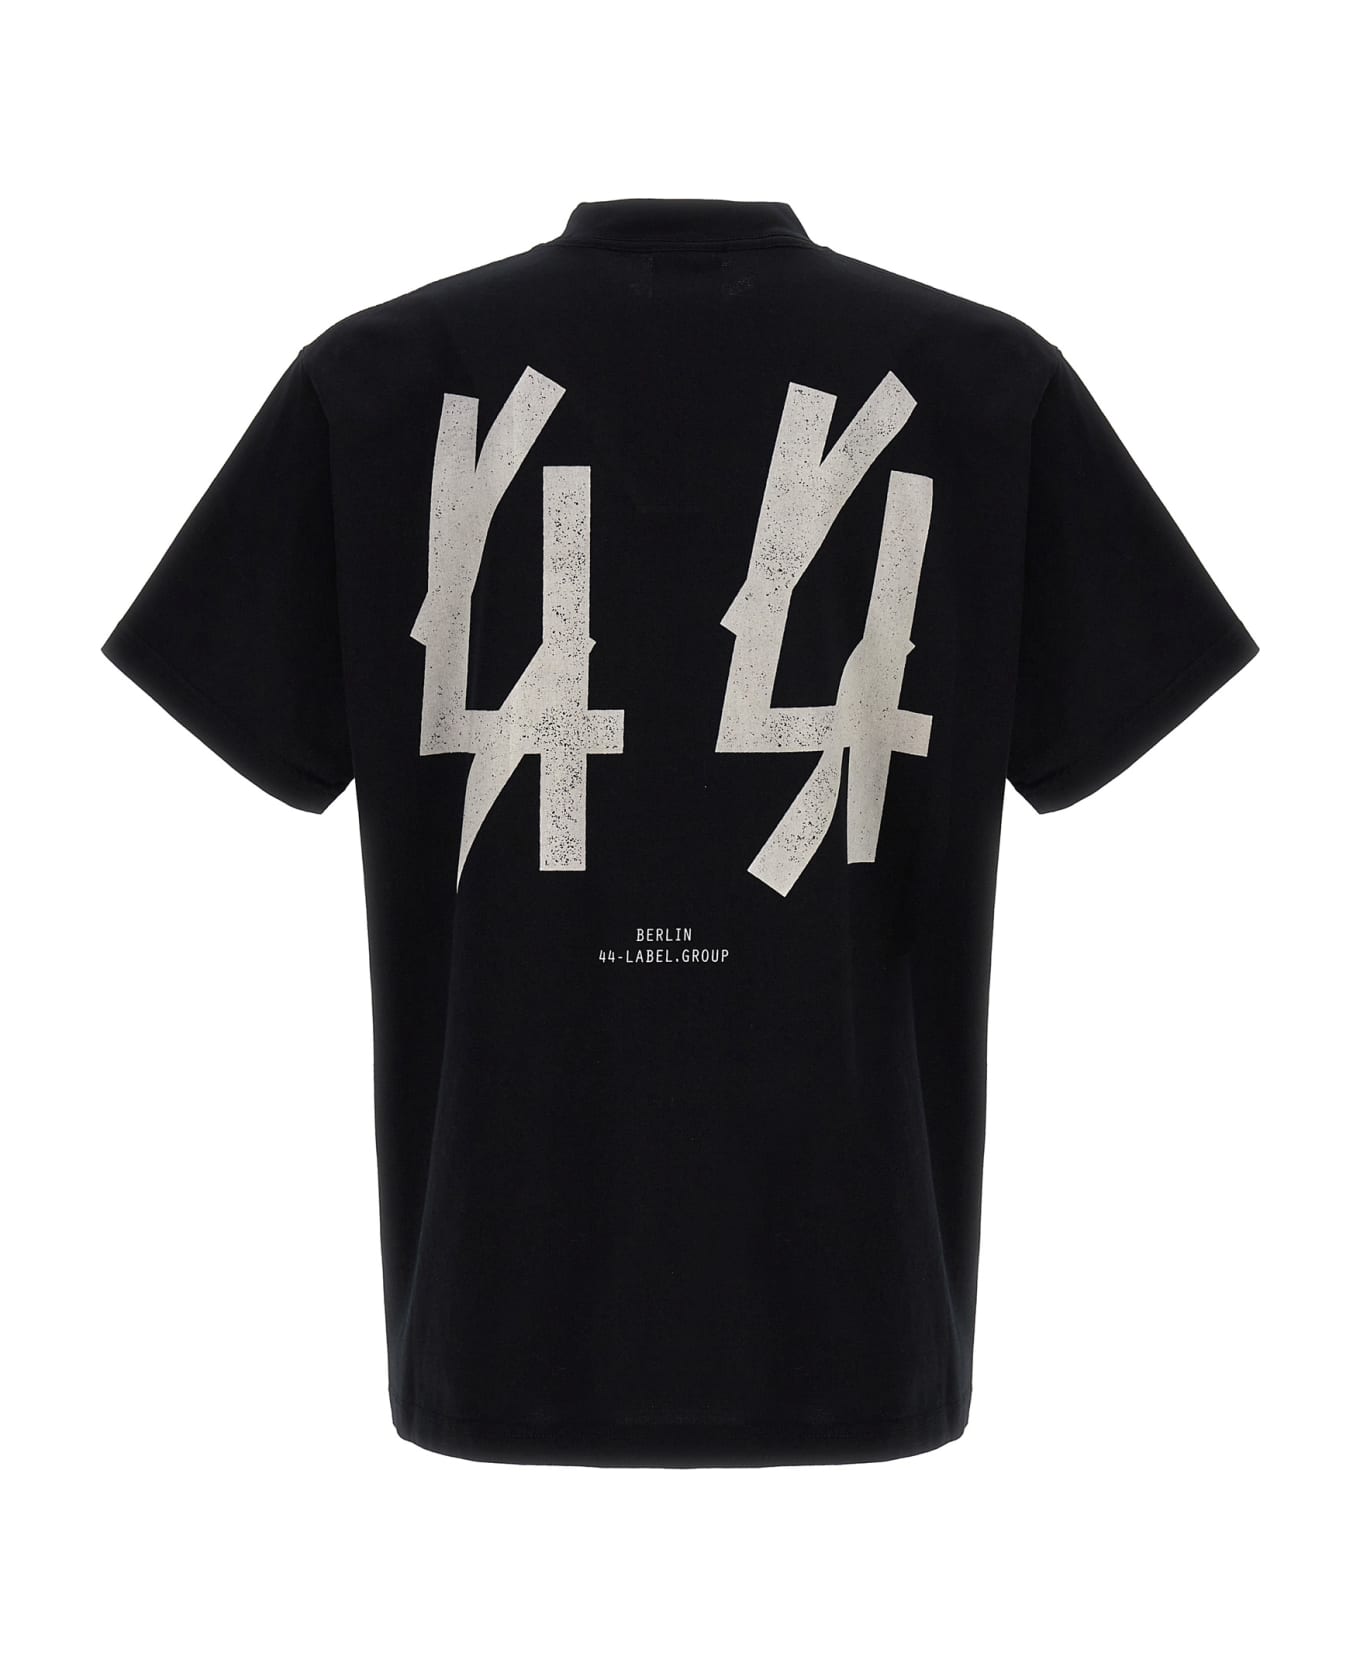 44 Label Group T-shirt Guestlist/berlin Sub' - BLACK